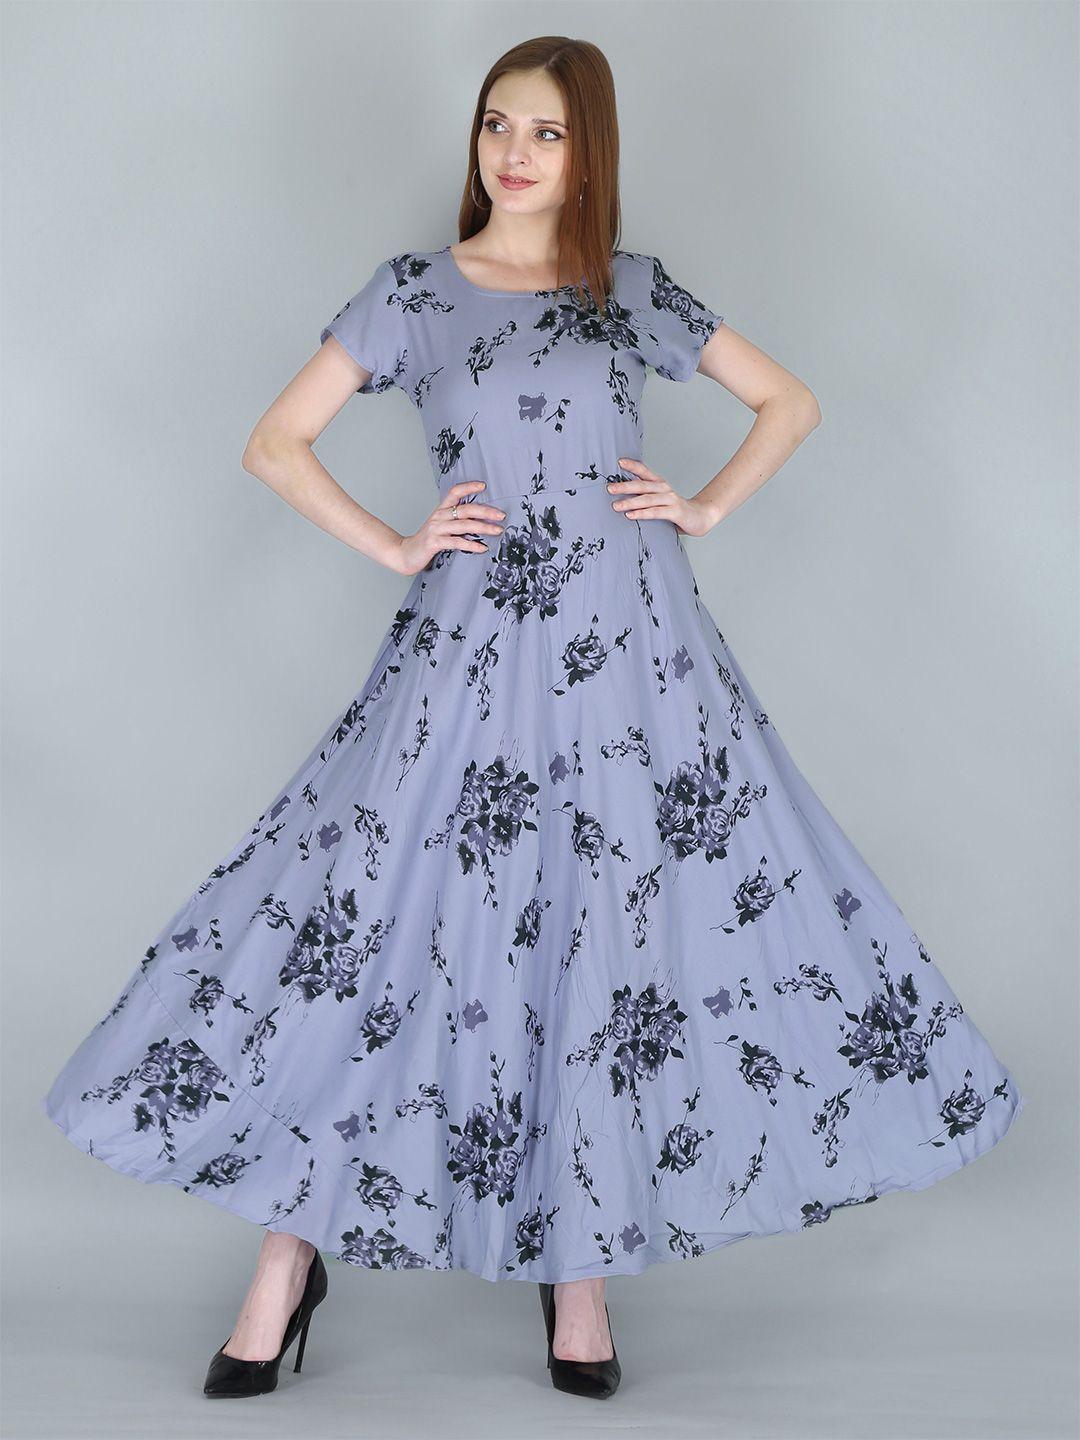 kalini grey & blue floral ethnic maxi dress